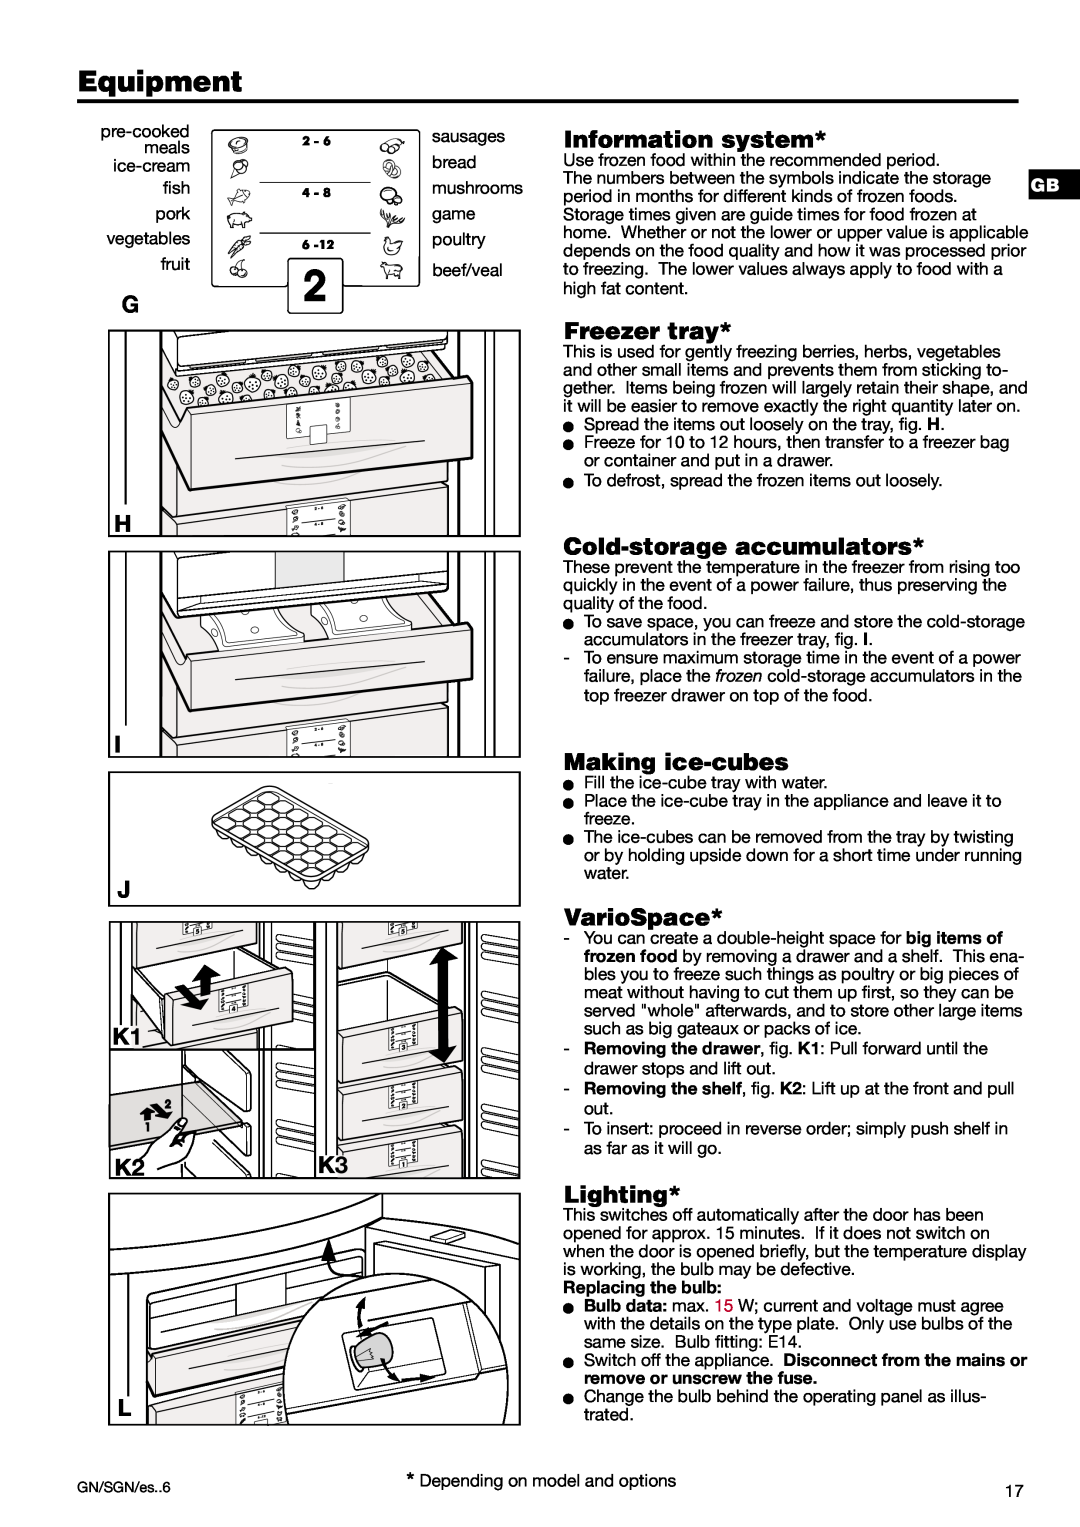 Liebherr 7082 300-03 Equipment, Information system, Freezer tray, Cold-storageaccumulators, Making ice-cubes, VarioSpace 